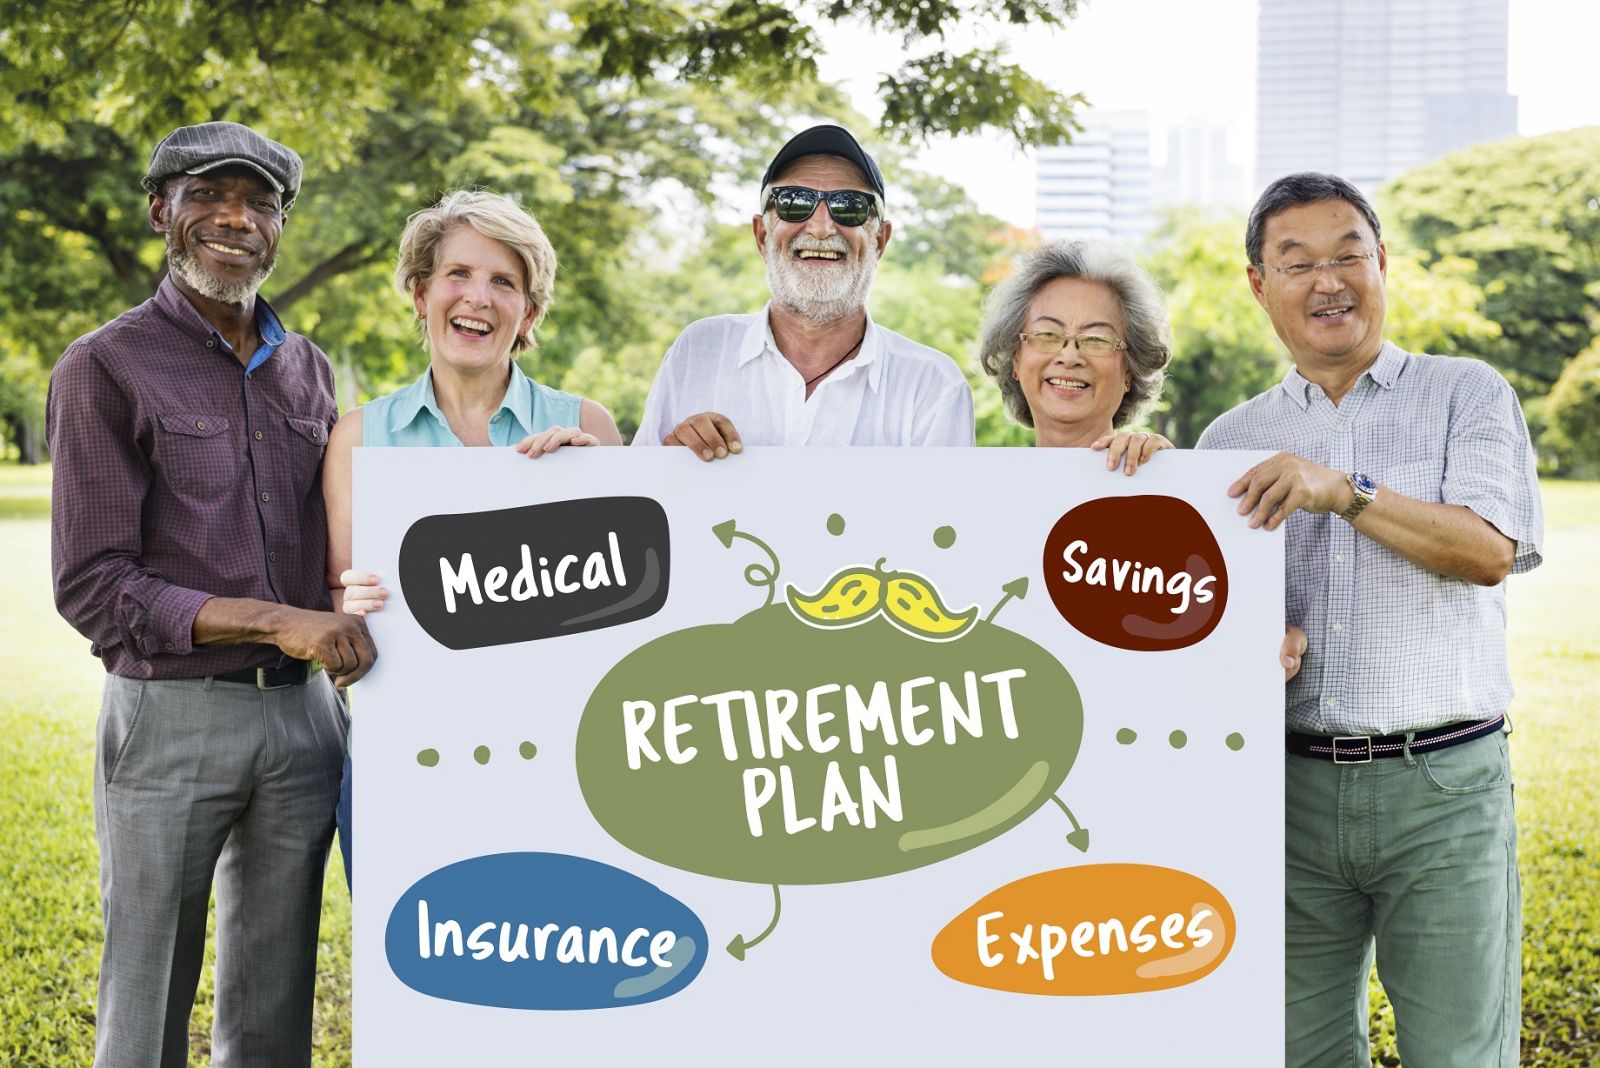 Top 5 Retirement Plan Options Article